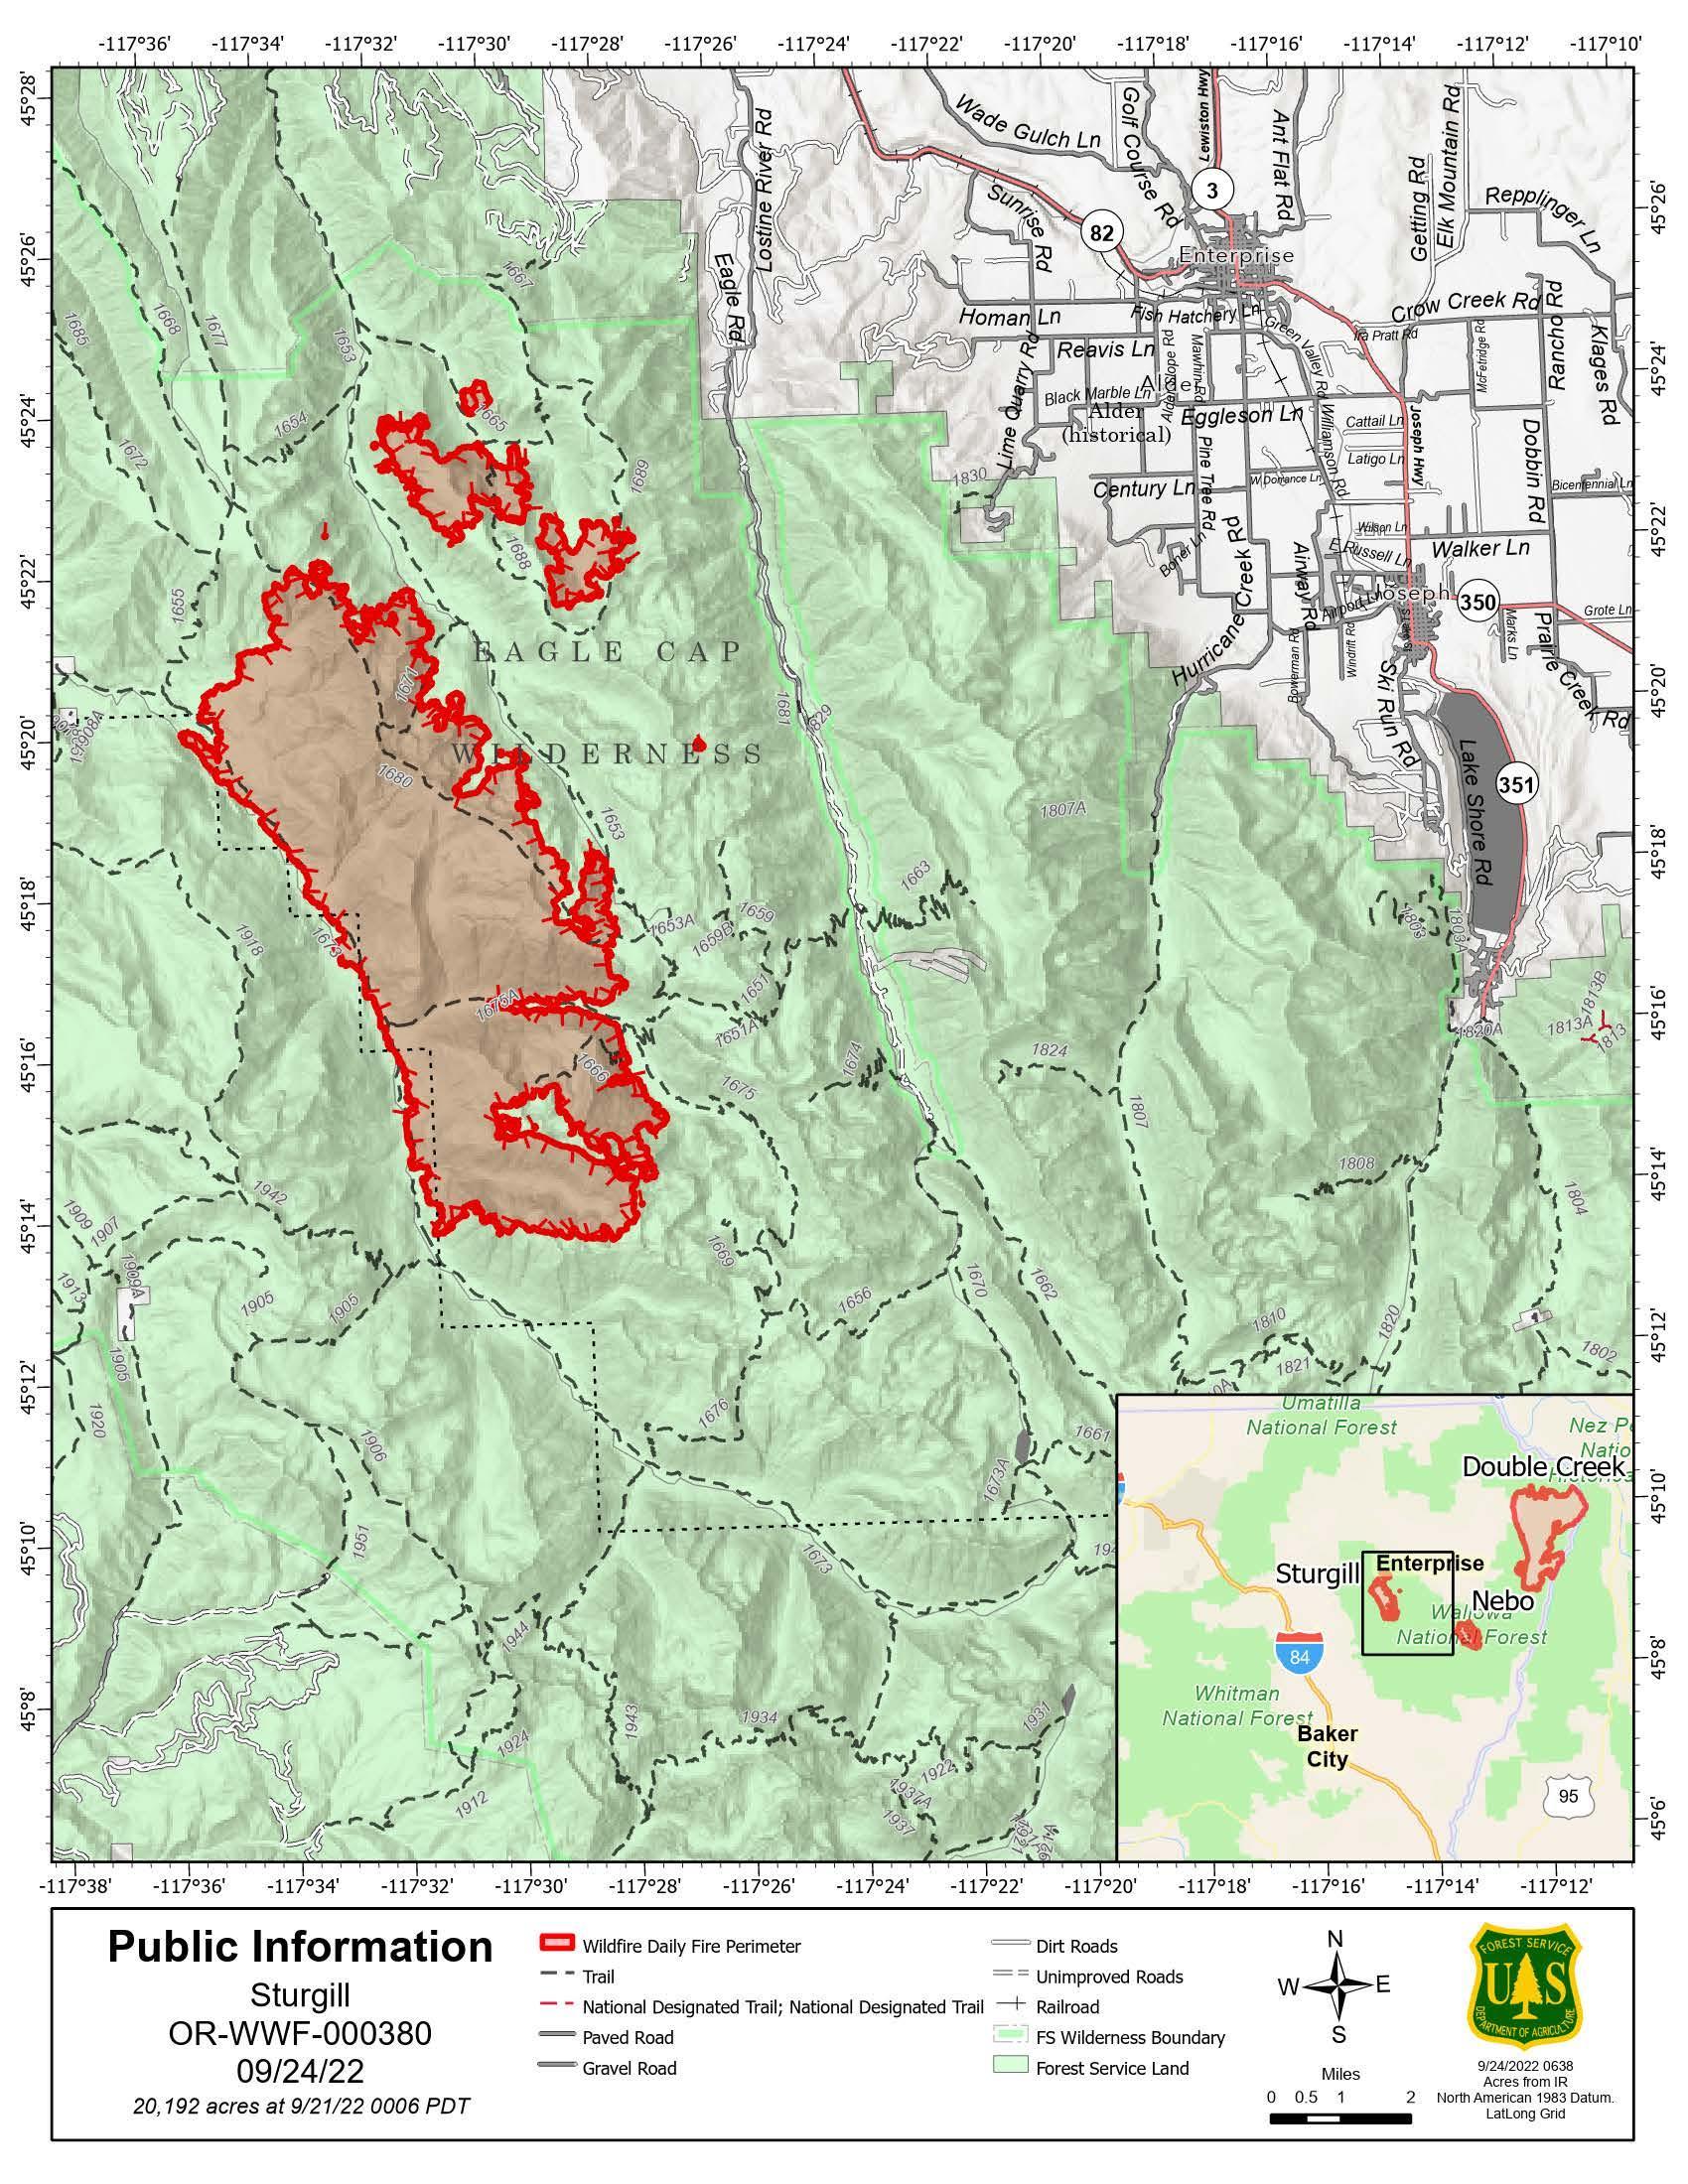 Sturgill Fire Map - 09/24/2022